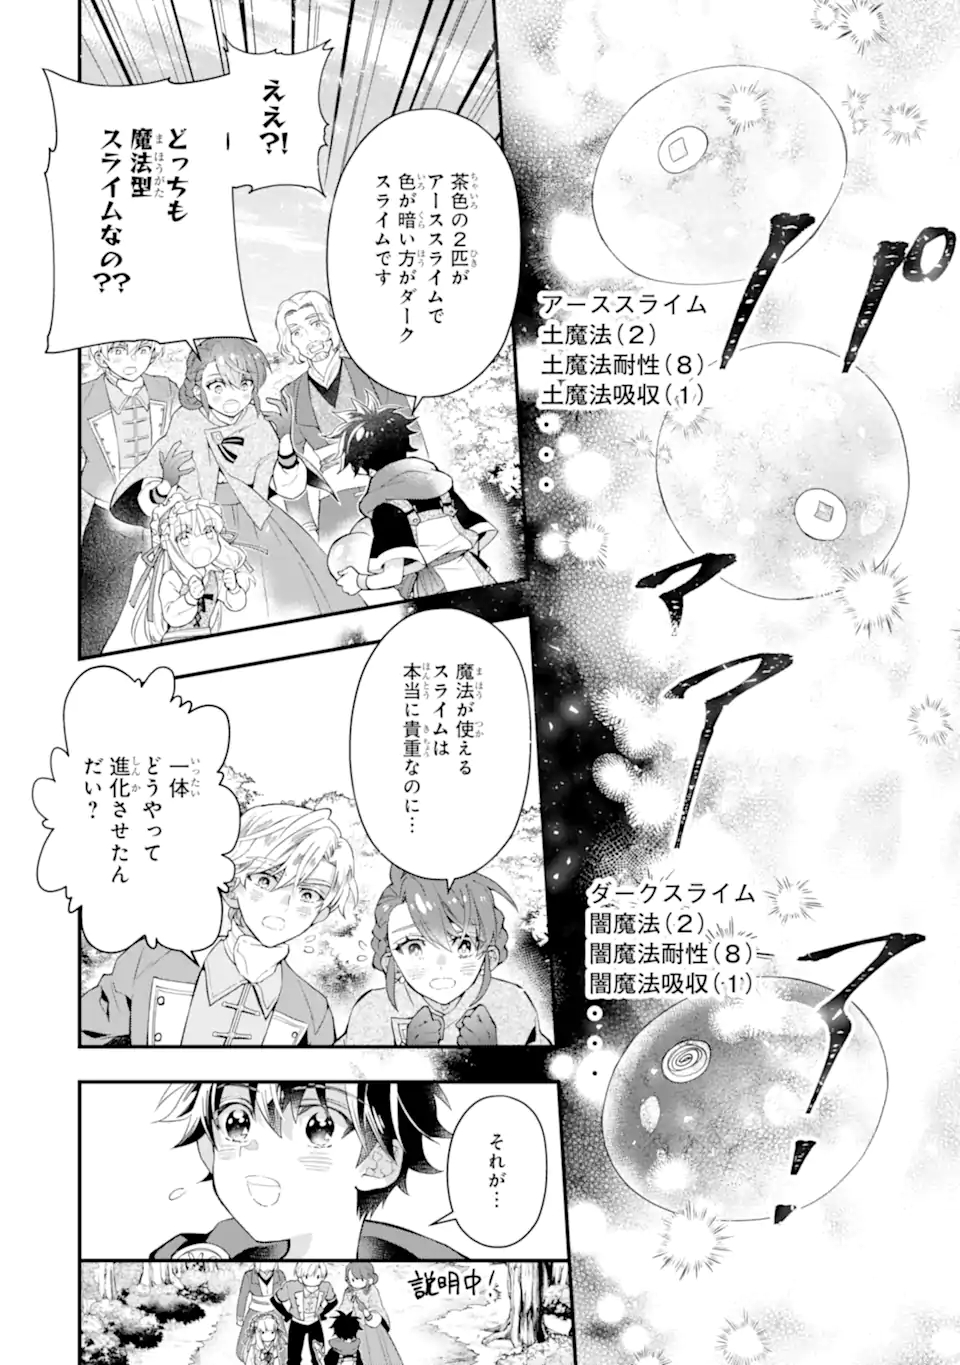 Read Kamitachi ni Hirowareta Otoko Manga English [New Chapters] Online Free  - MangaClash